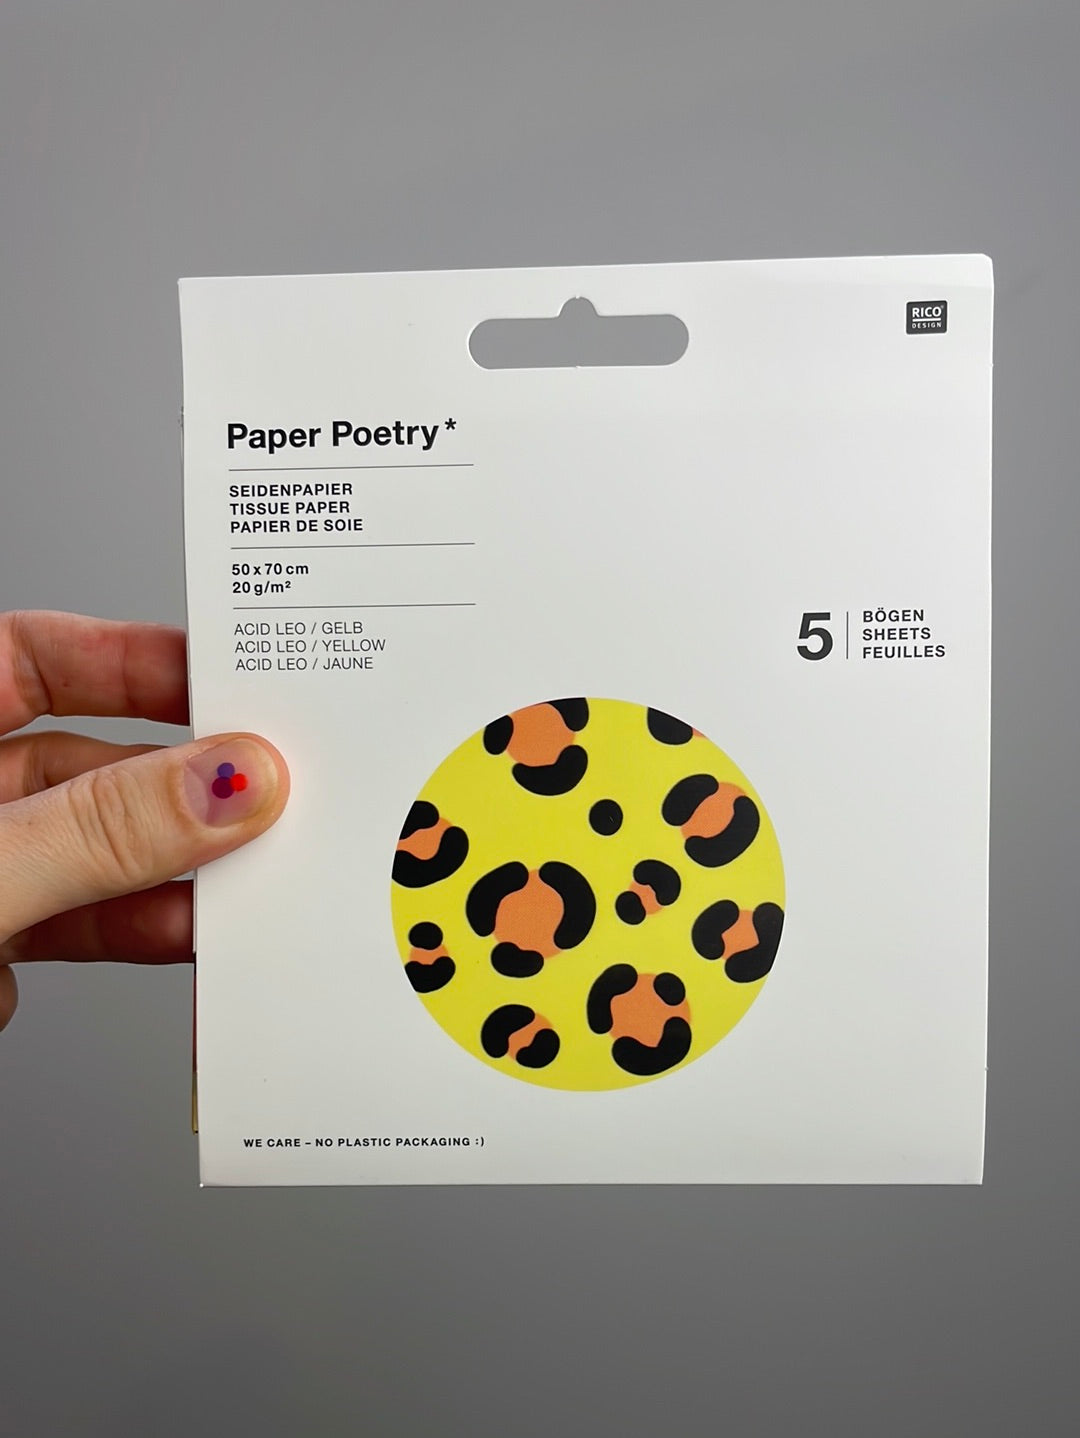 Paper Poetry • Seidenpapier • Acid Leo gelb